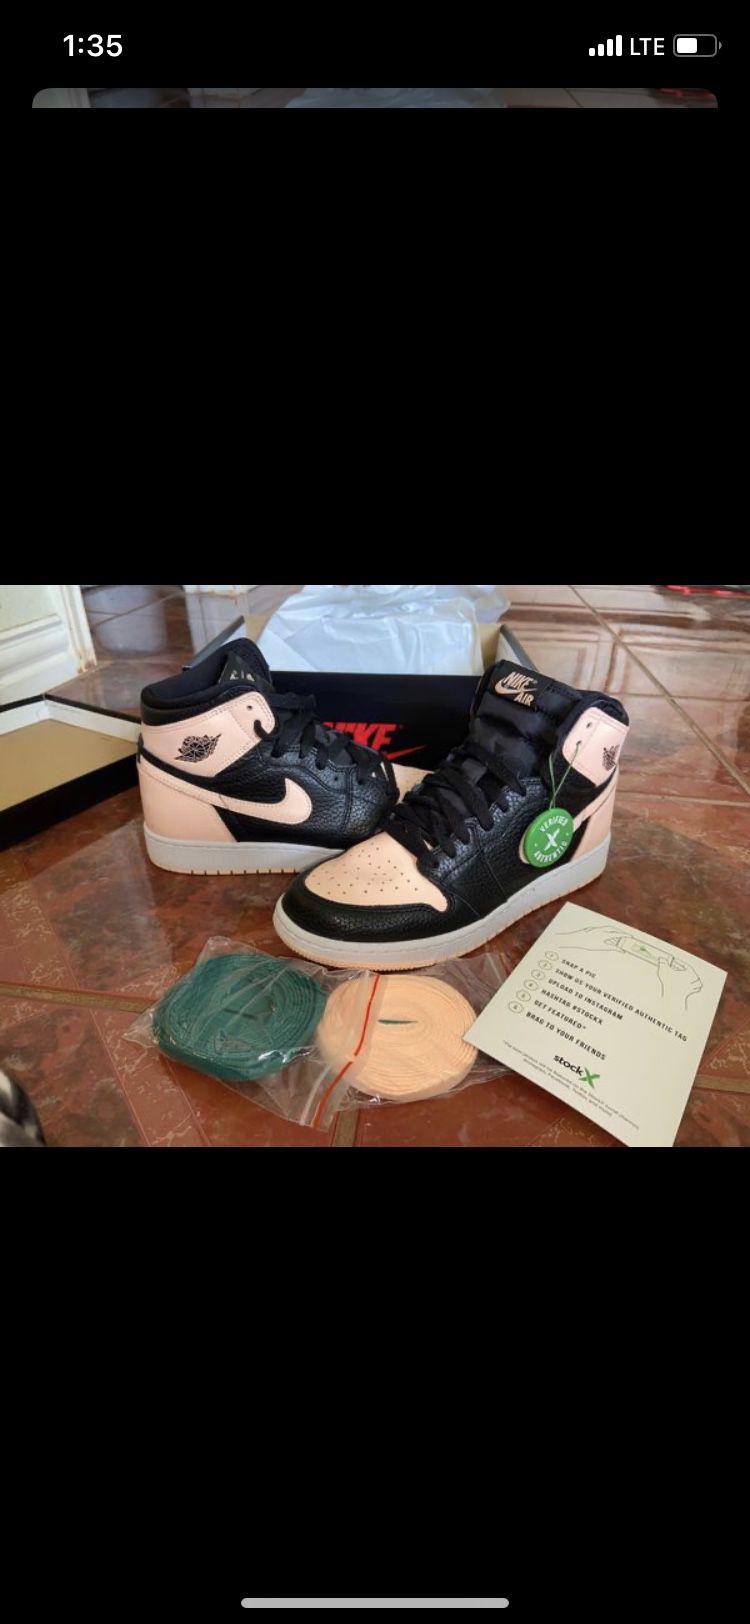 Nike Air Jordan 1s retro high og gs leather